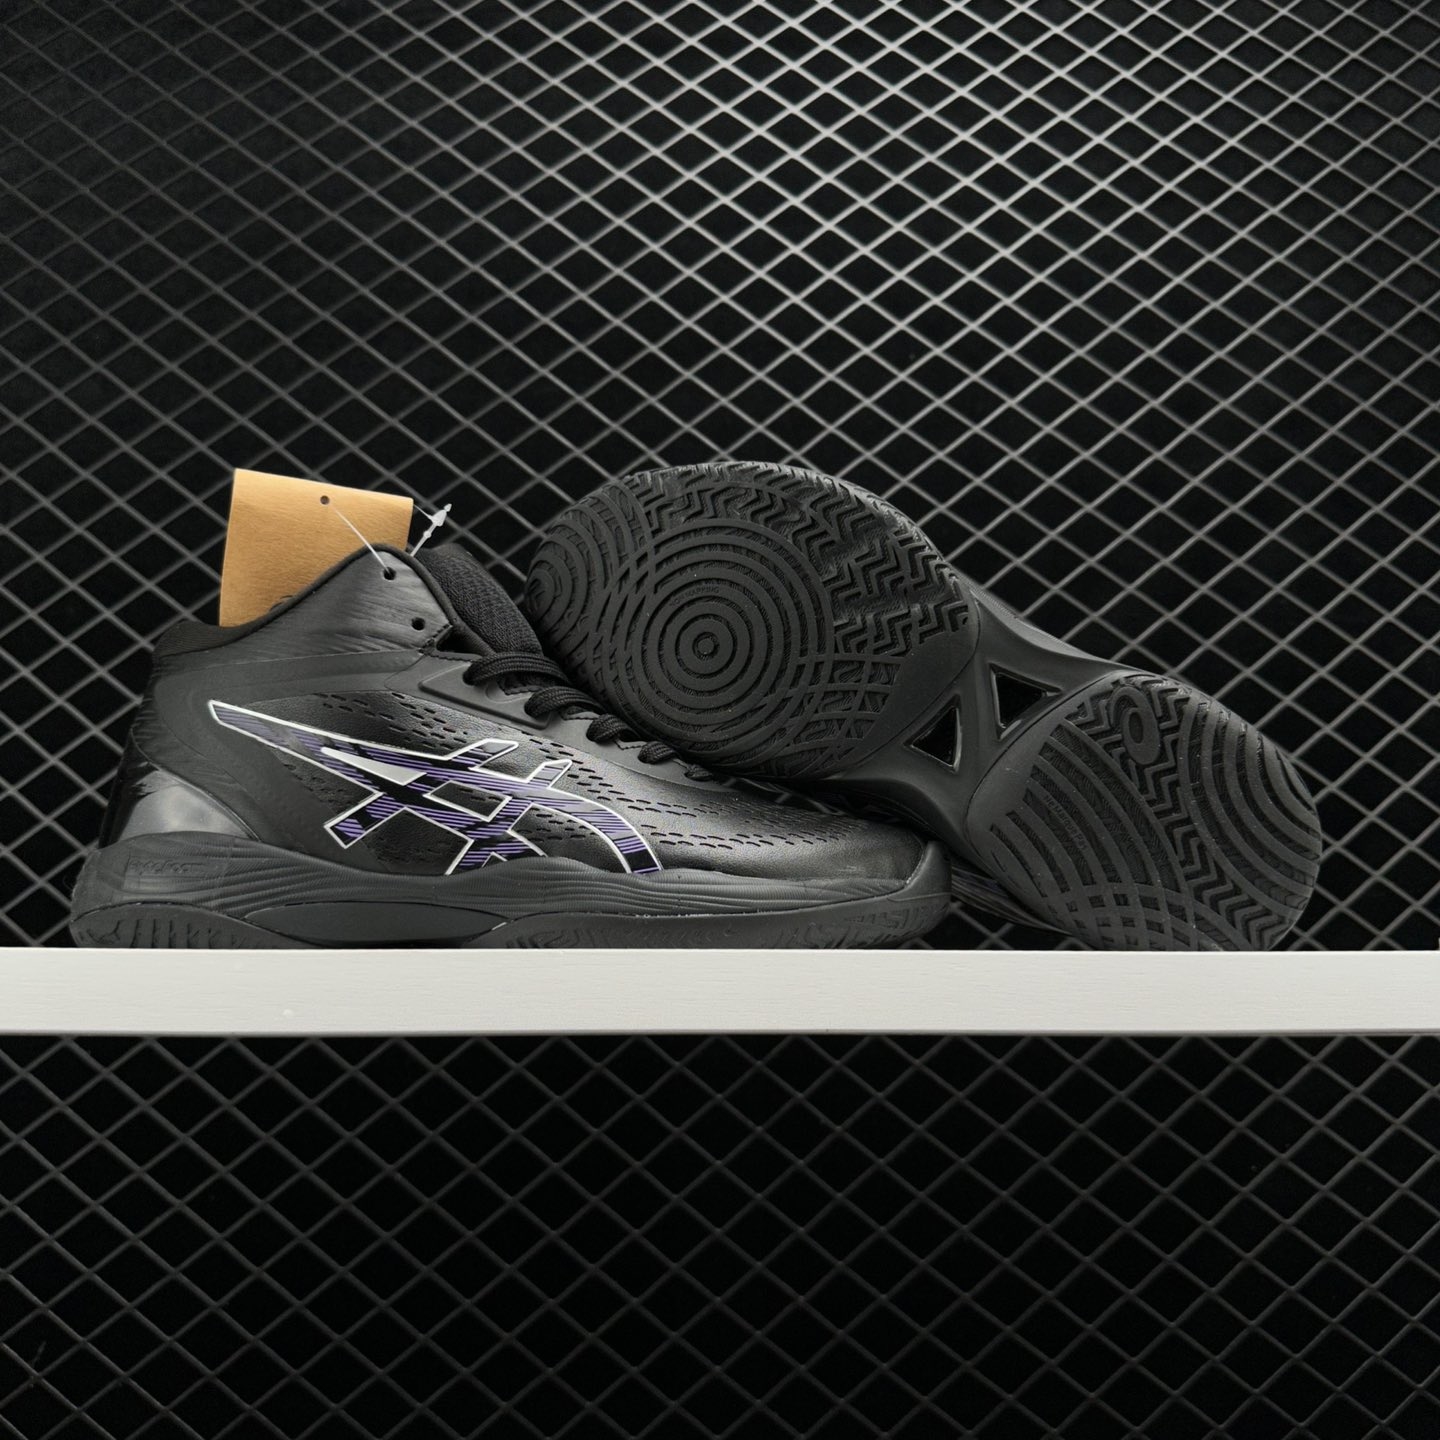 Asics GelHoop V14 Black Purple - Lightweight Basketball Shoes